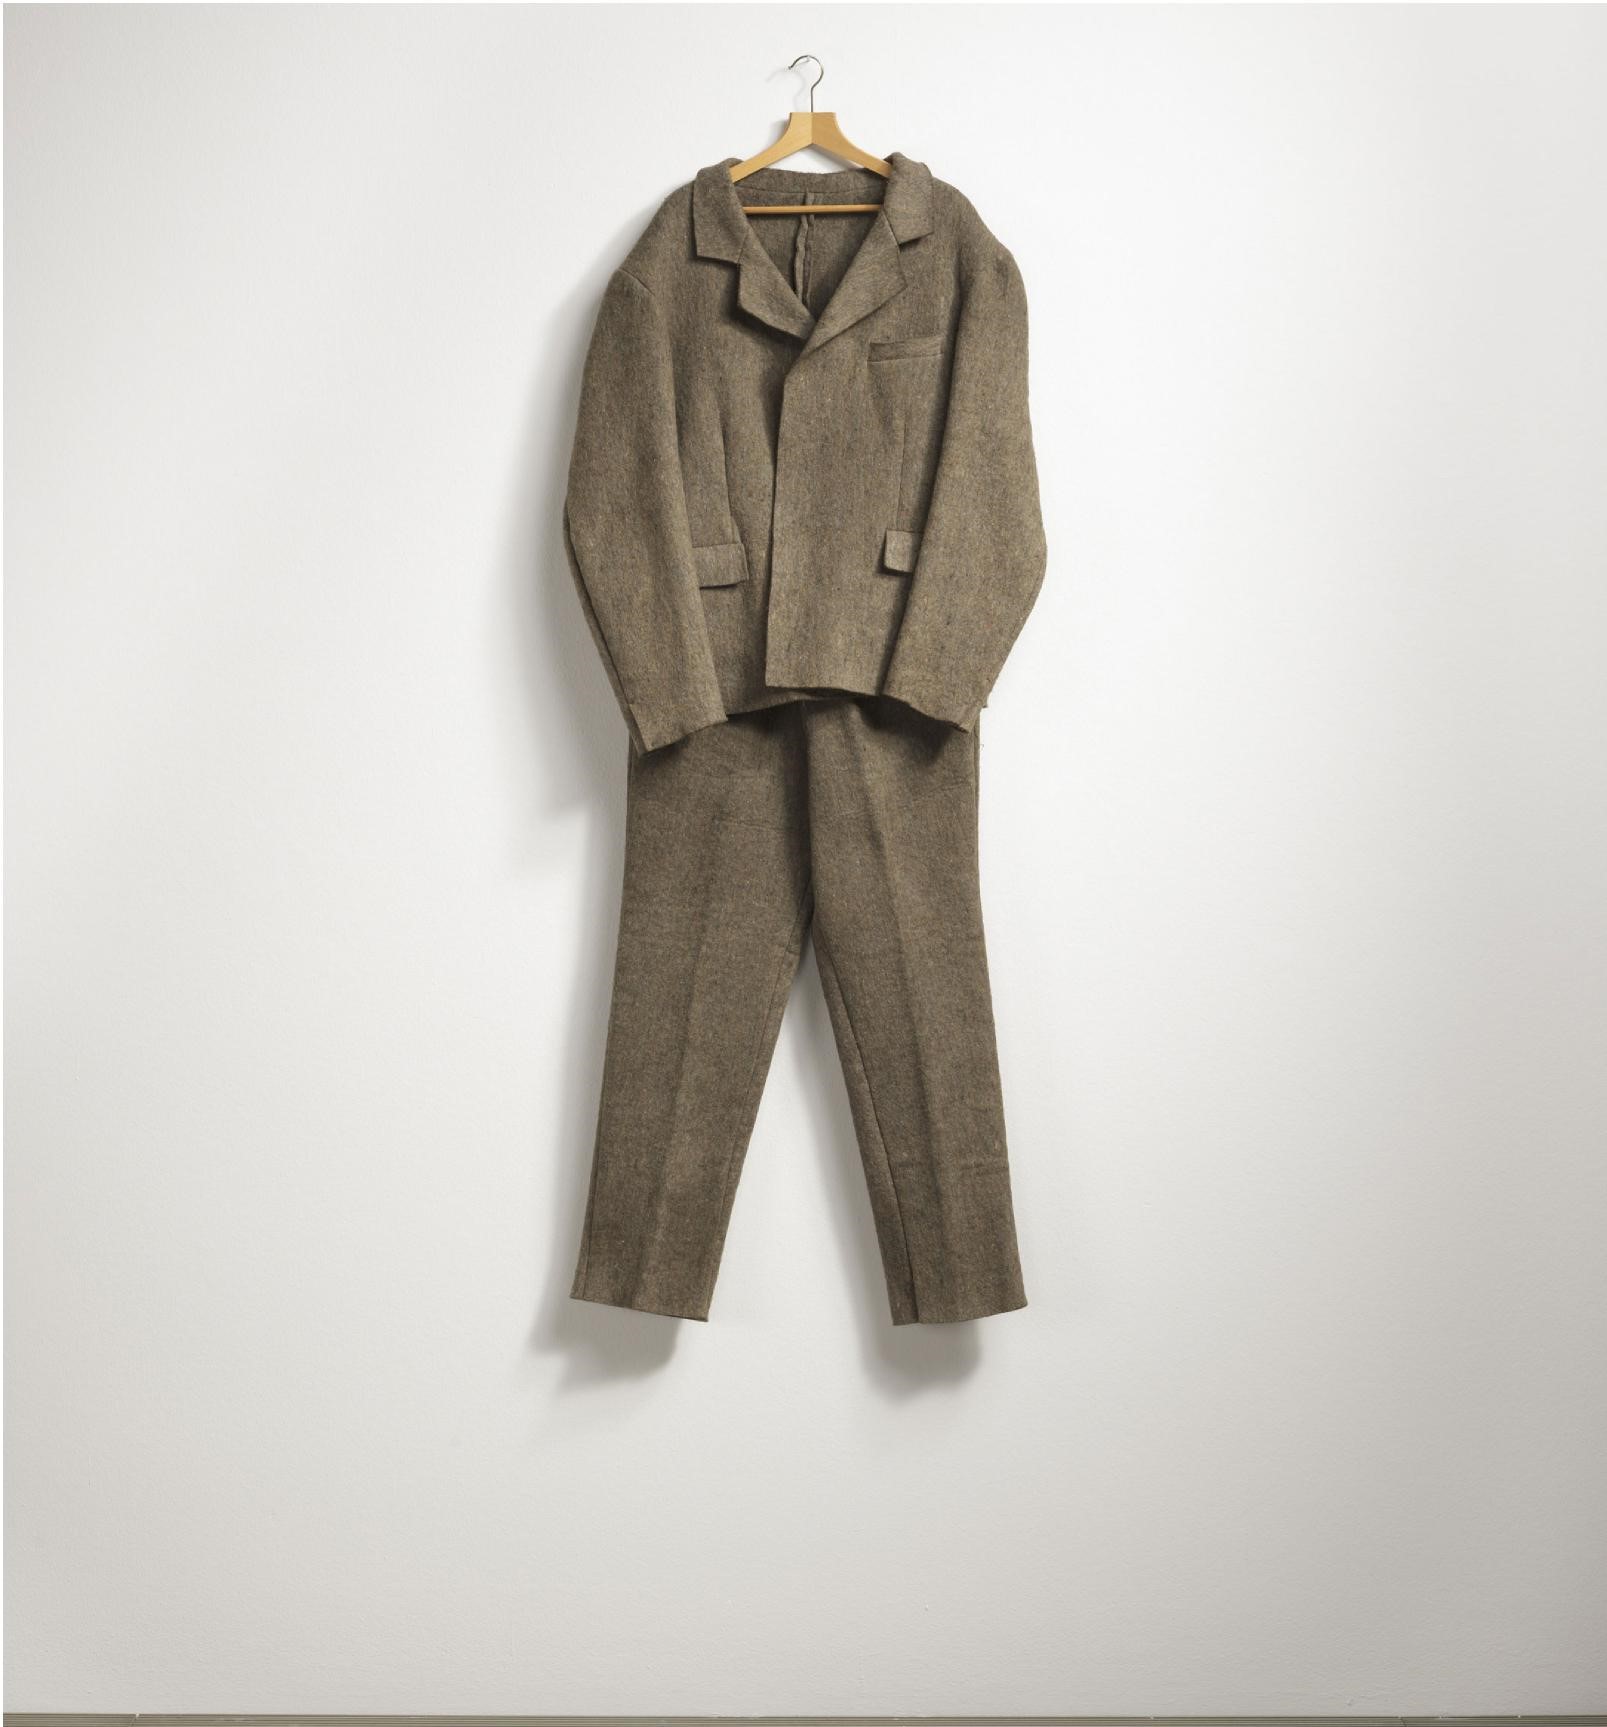 Joseph Beuys, Felt Suit, 1970, Tate Modern